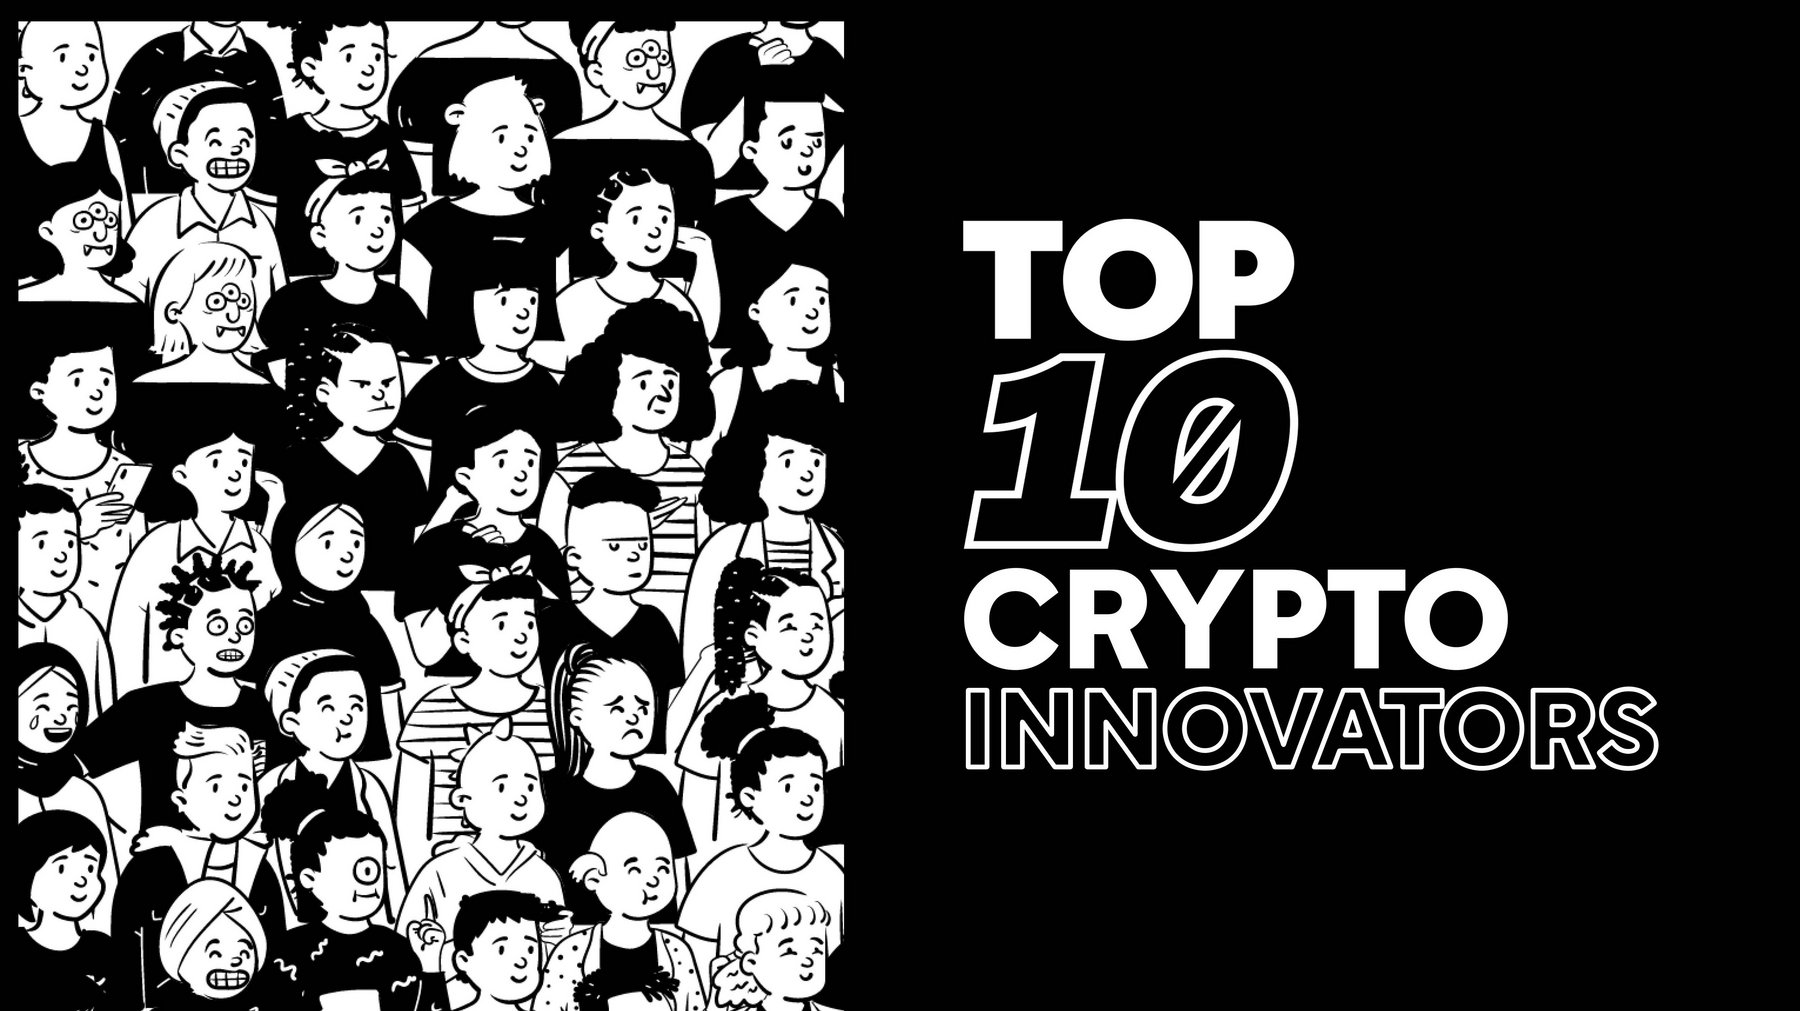 Top 10 crypto innovators FinTech Magazine